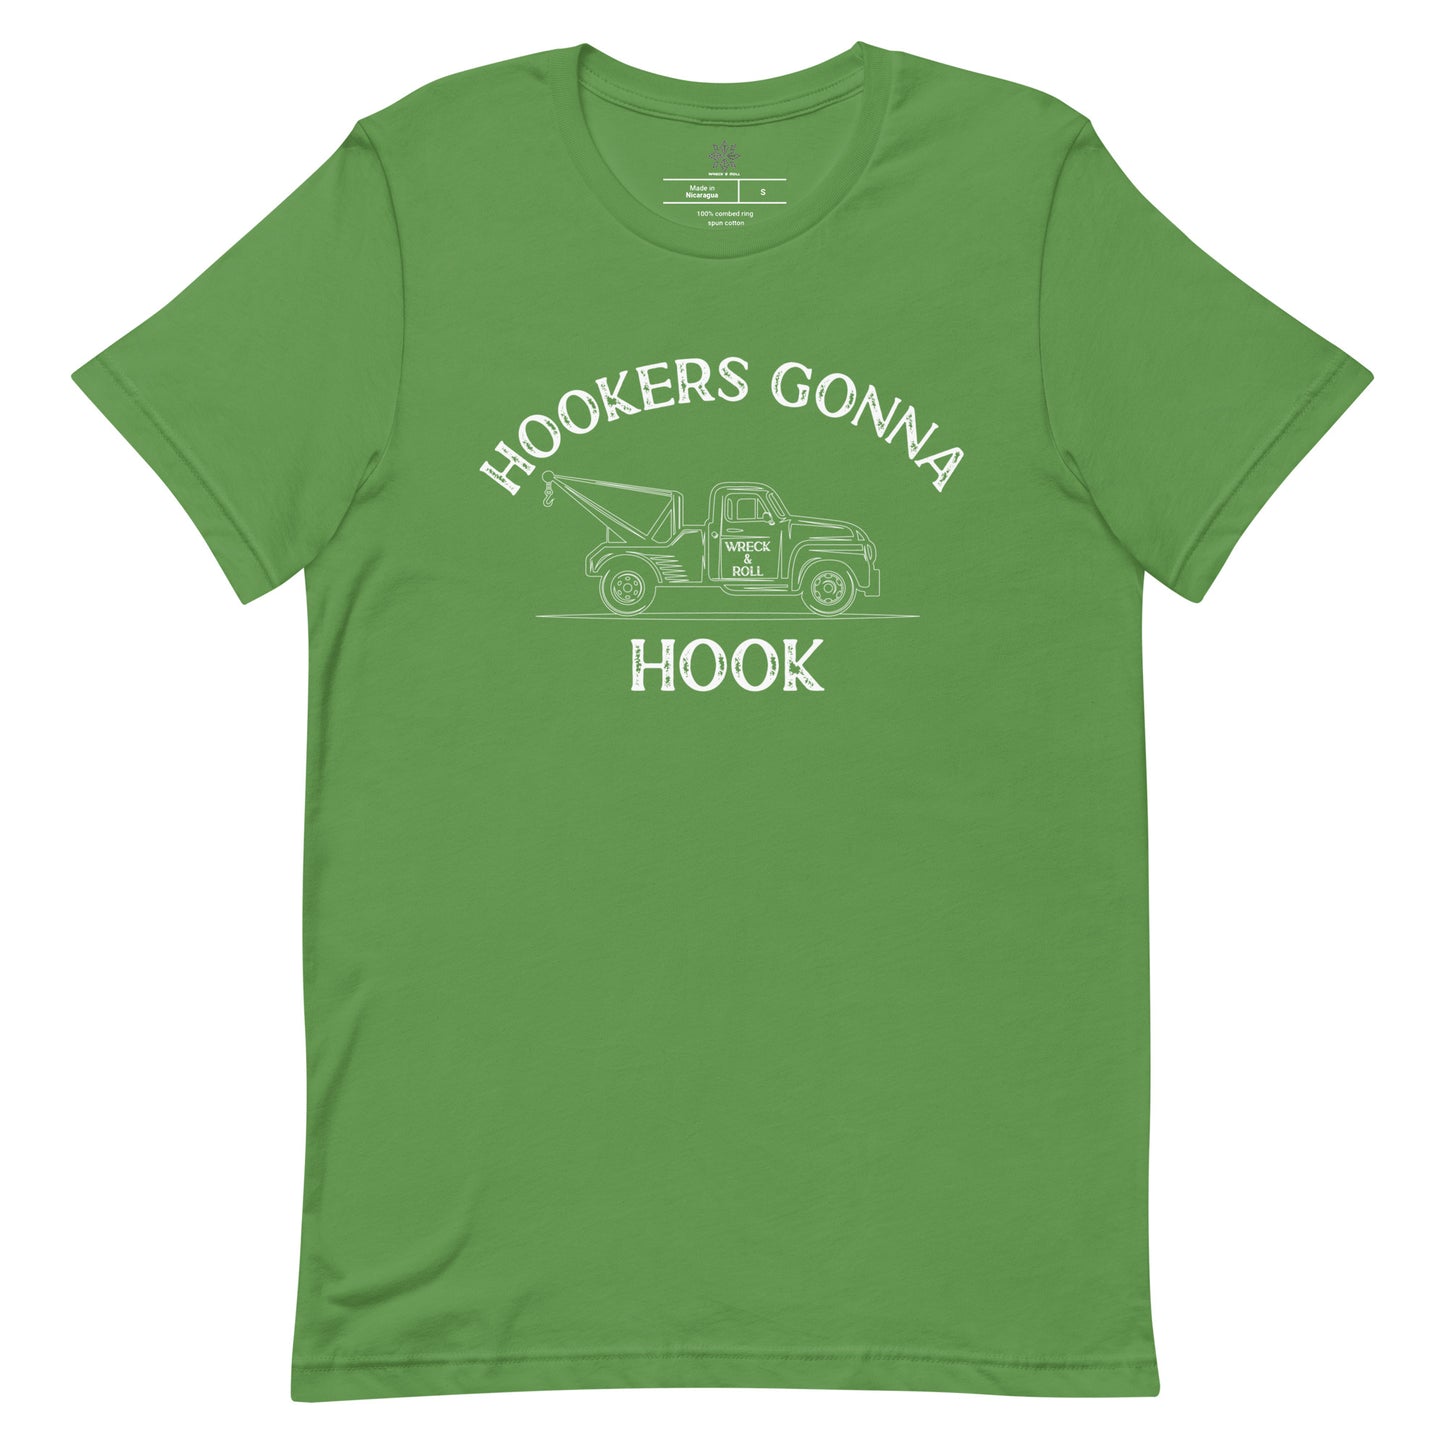 Hookers Gonna Hook Unisex t-shirt